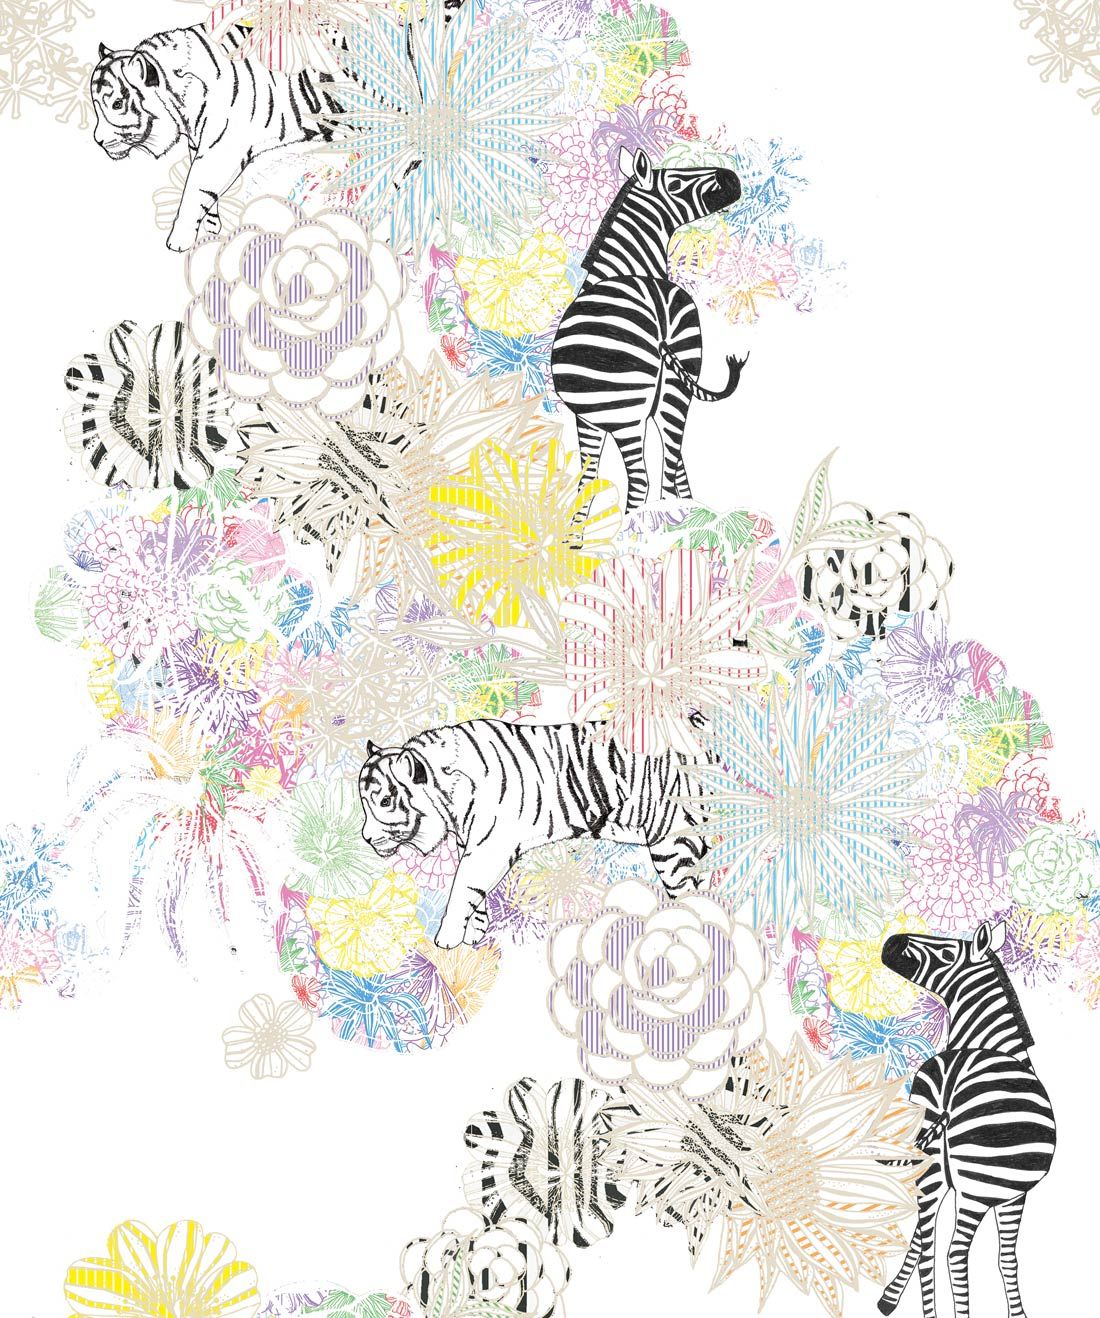 Tigers & Zebras is a animal flower wallpaper